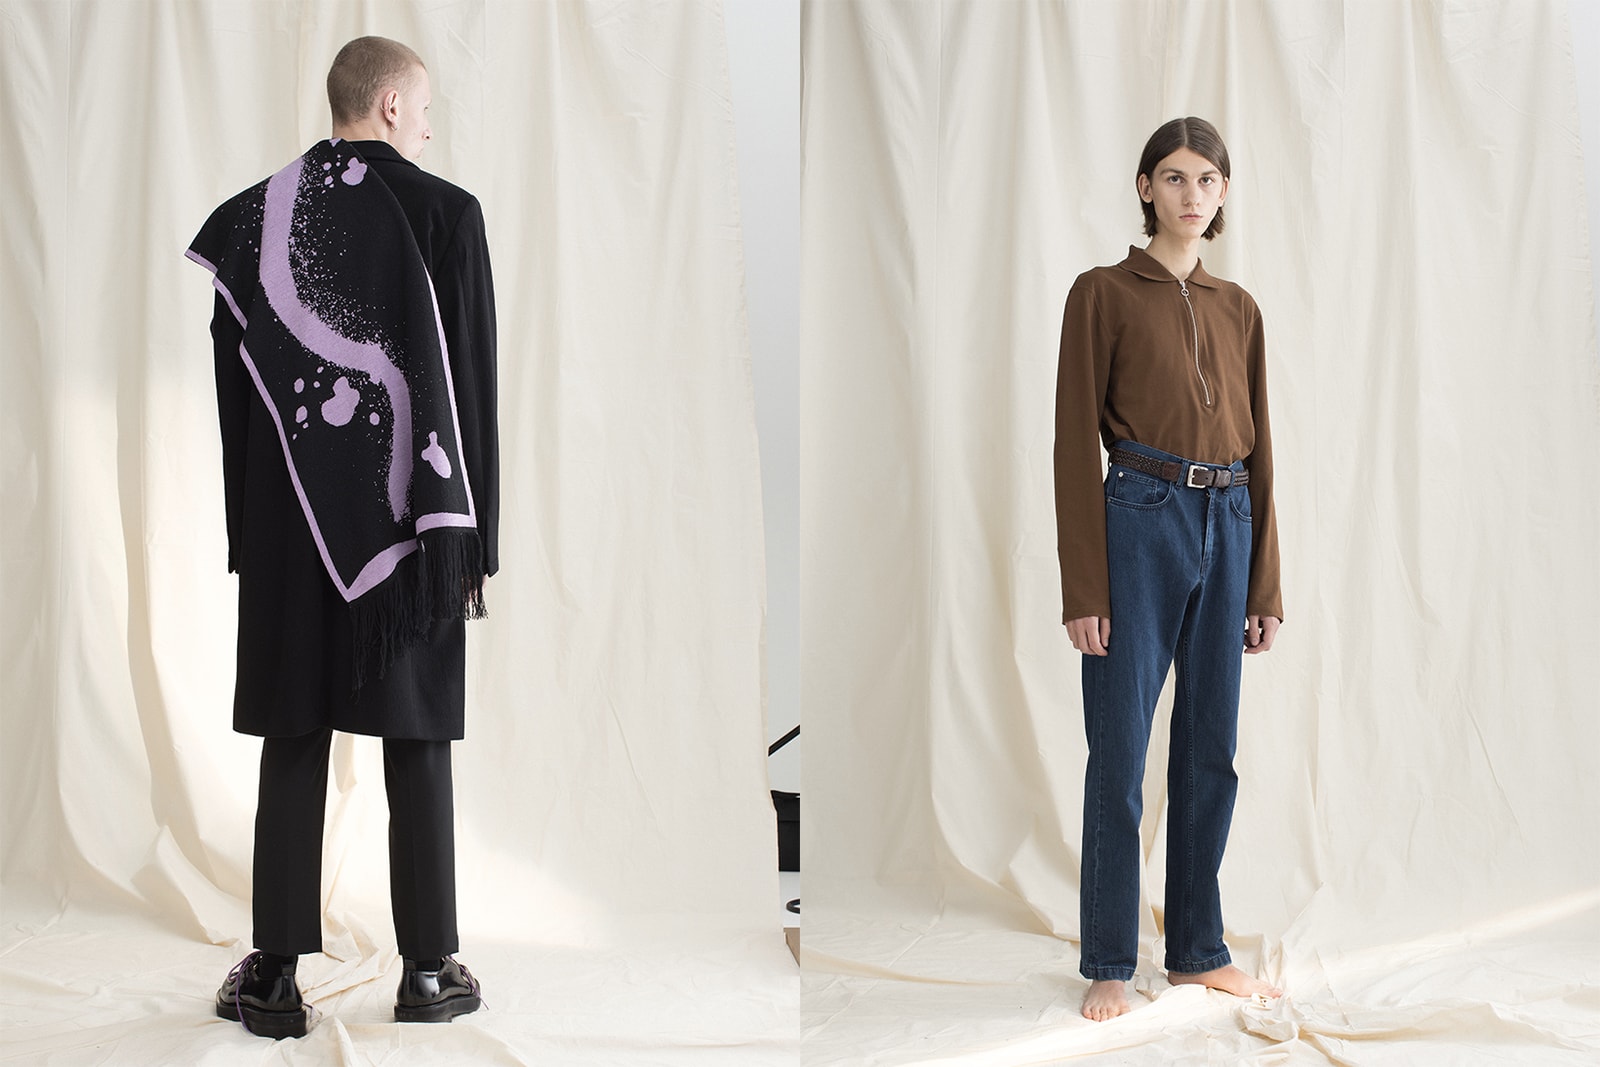 L'HOMME ROUGE interview brand introduction Sweden Scandinavia minimalism